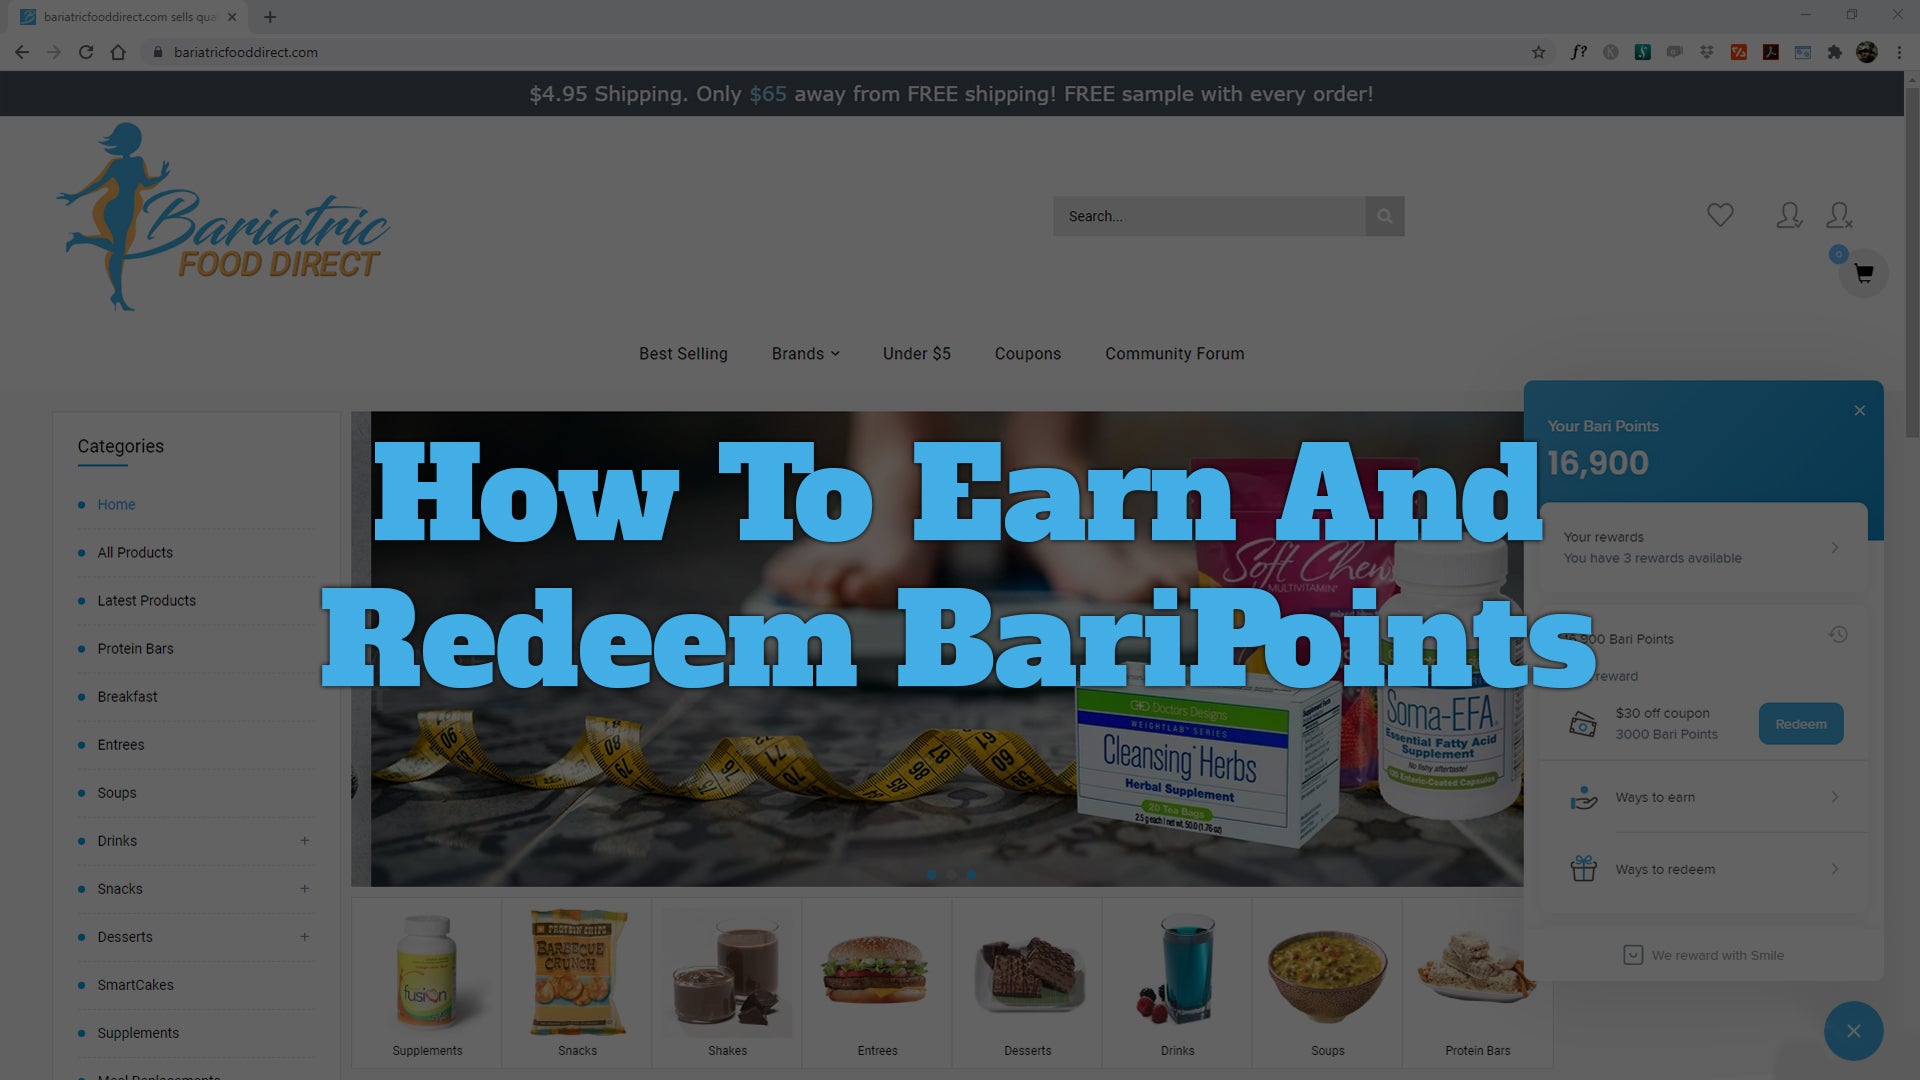 The BariPoint Rewards Program